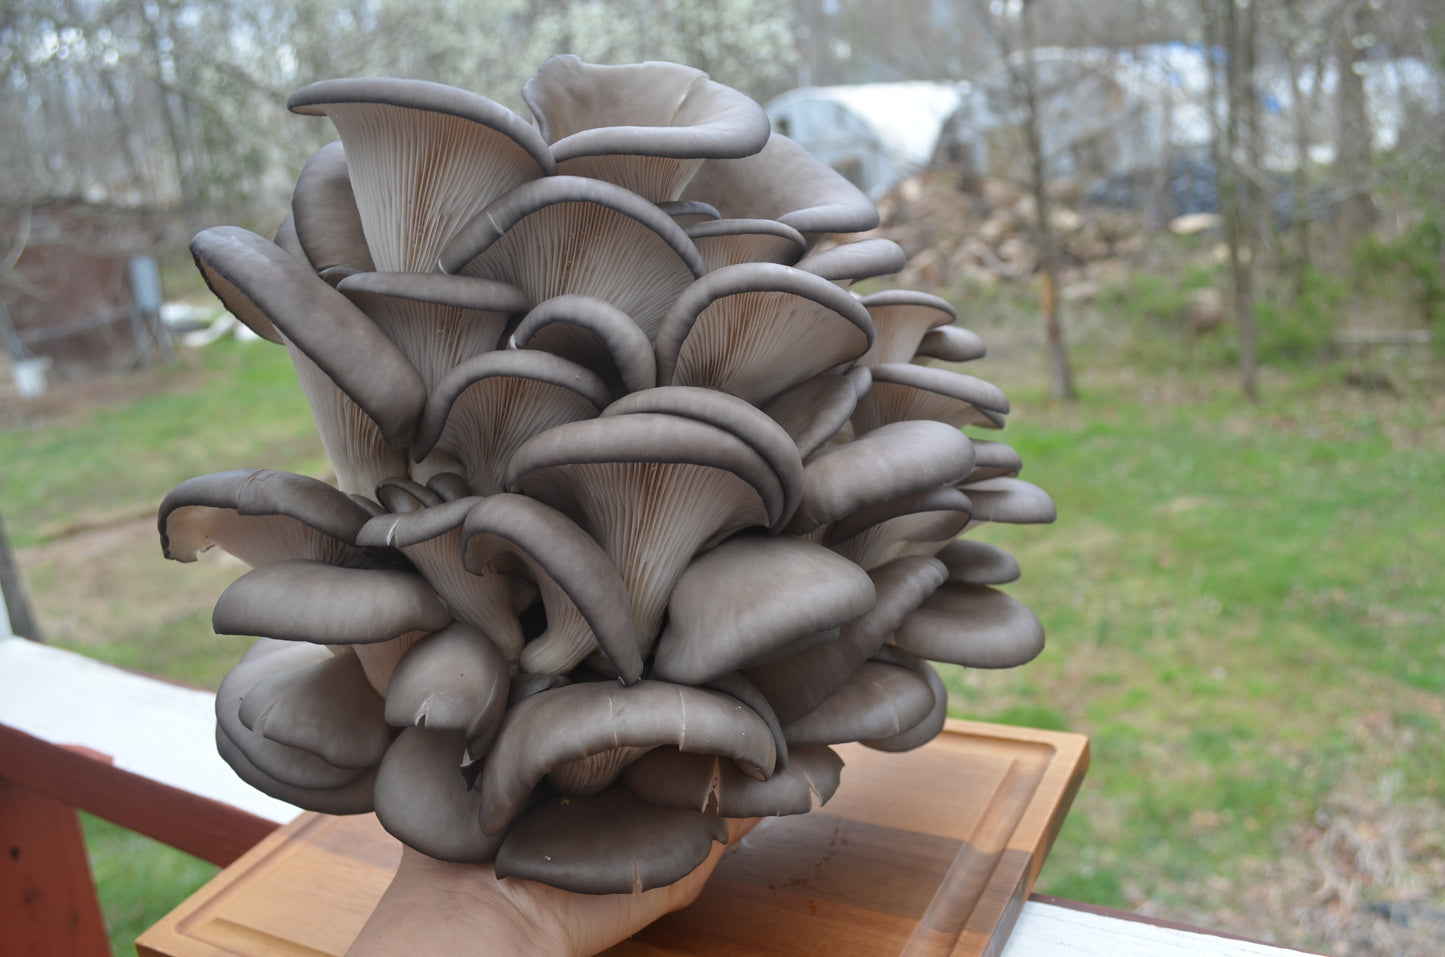 5lbs Fresh Oyster Mushrooms